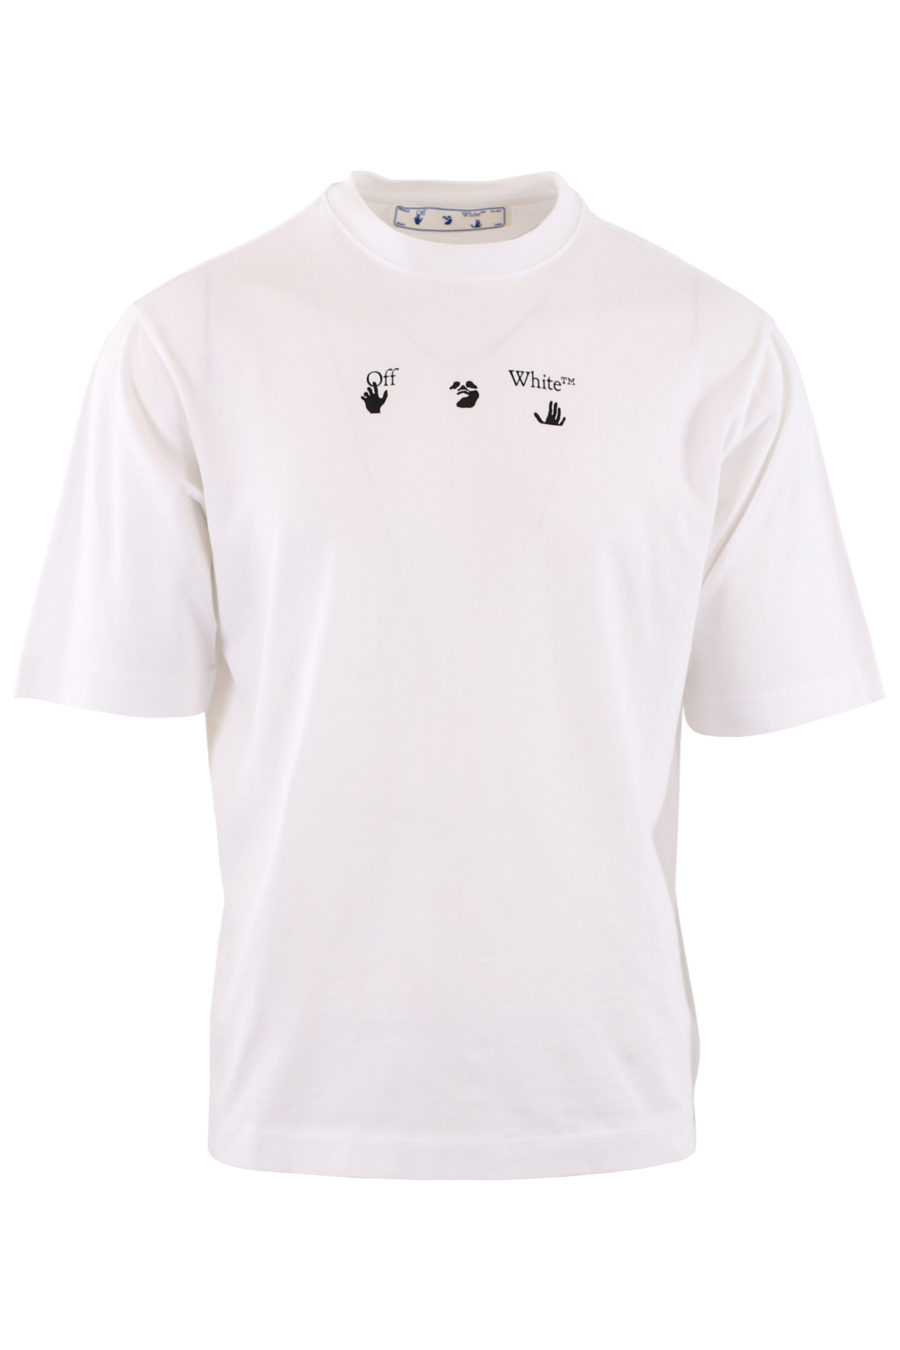 Camiseta blanca con logo bordado "Arrows" - IMG1 9237